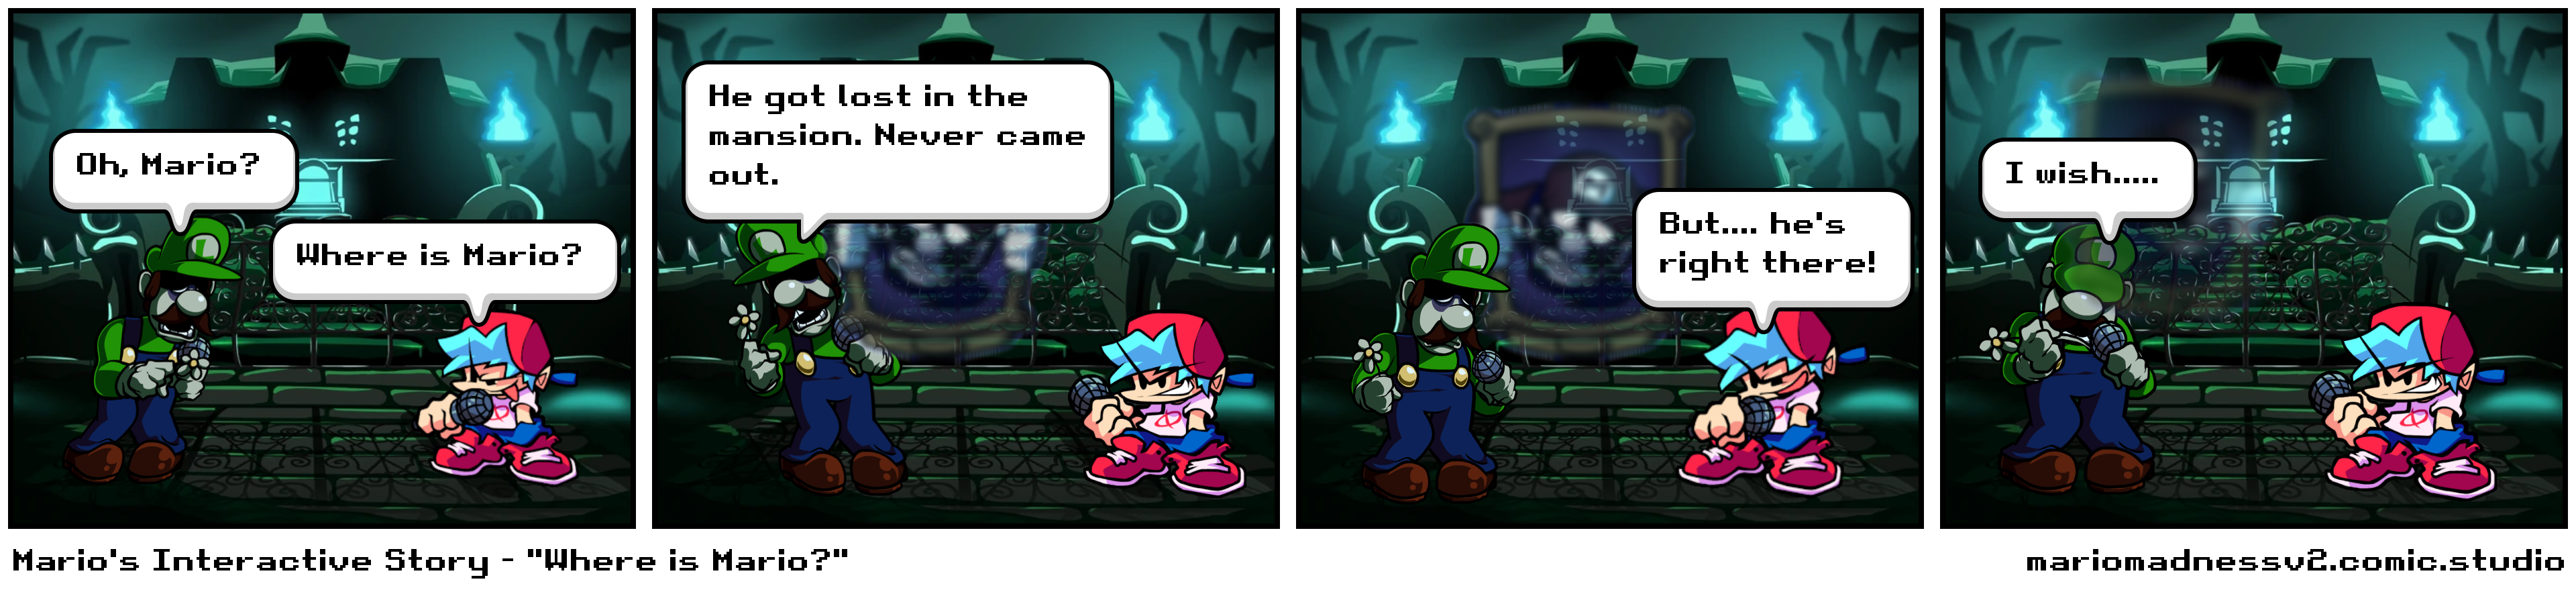 Mario's Interactive Story - "Where is Mario?" 